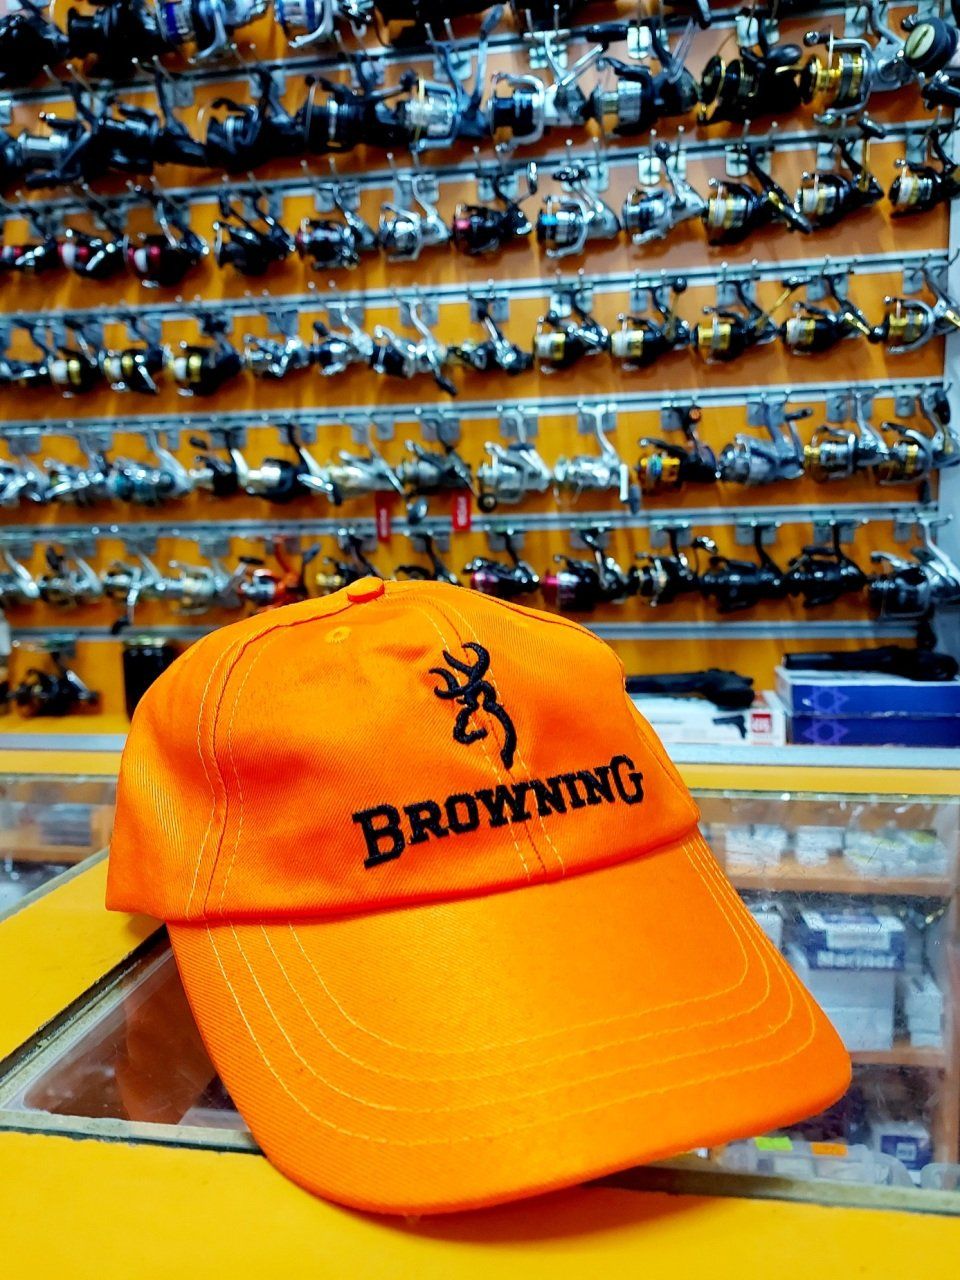 Browning Turuncu Şapka